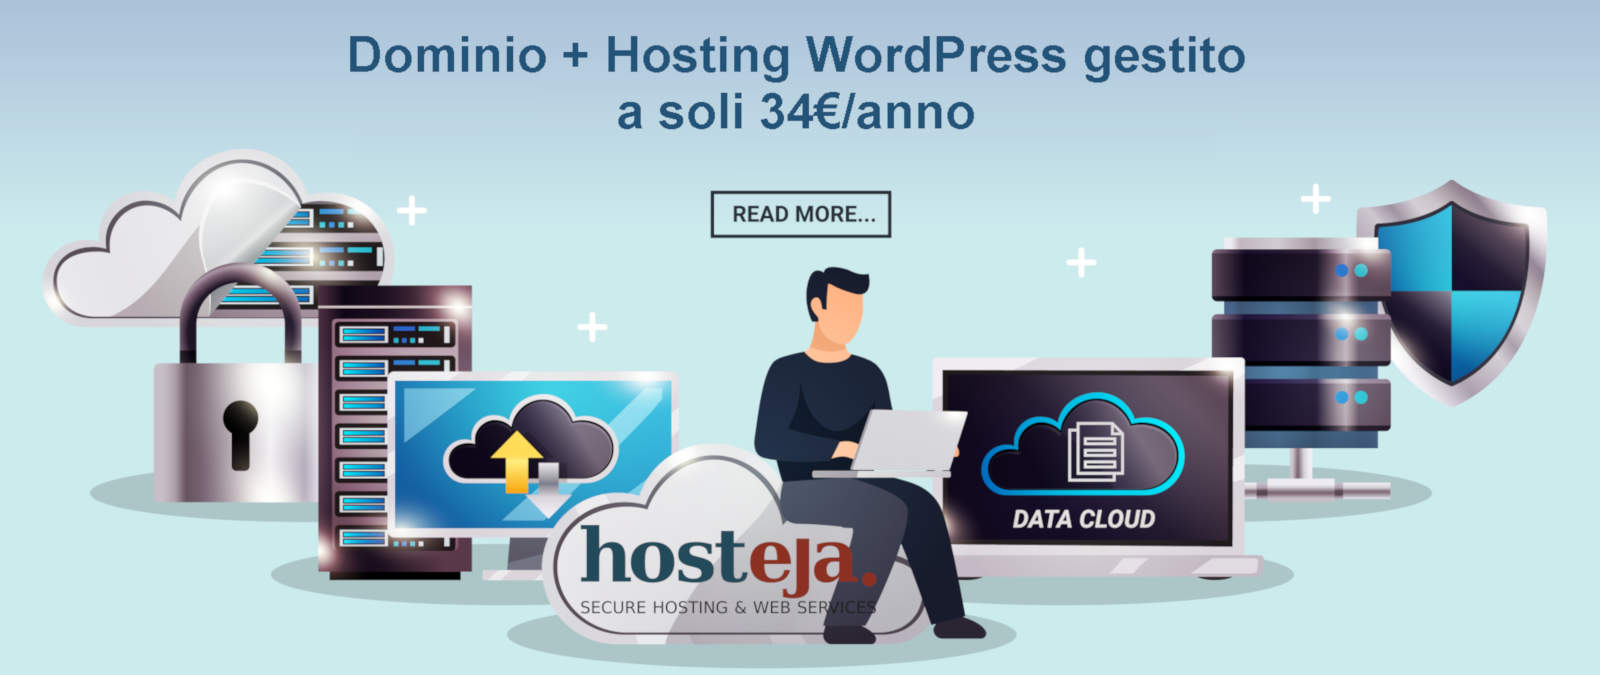 Dominio + Hosting WordPress gestito - Hosting Service Provider. hosteja.com